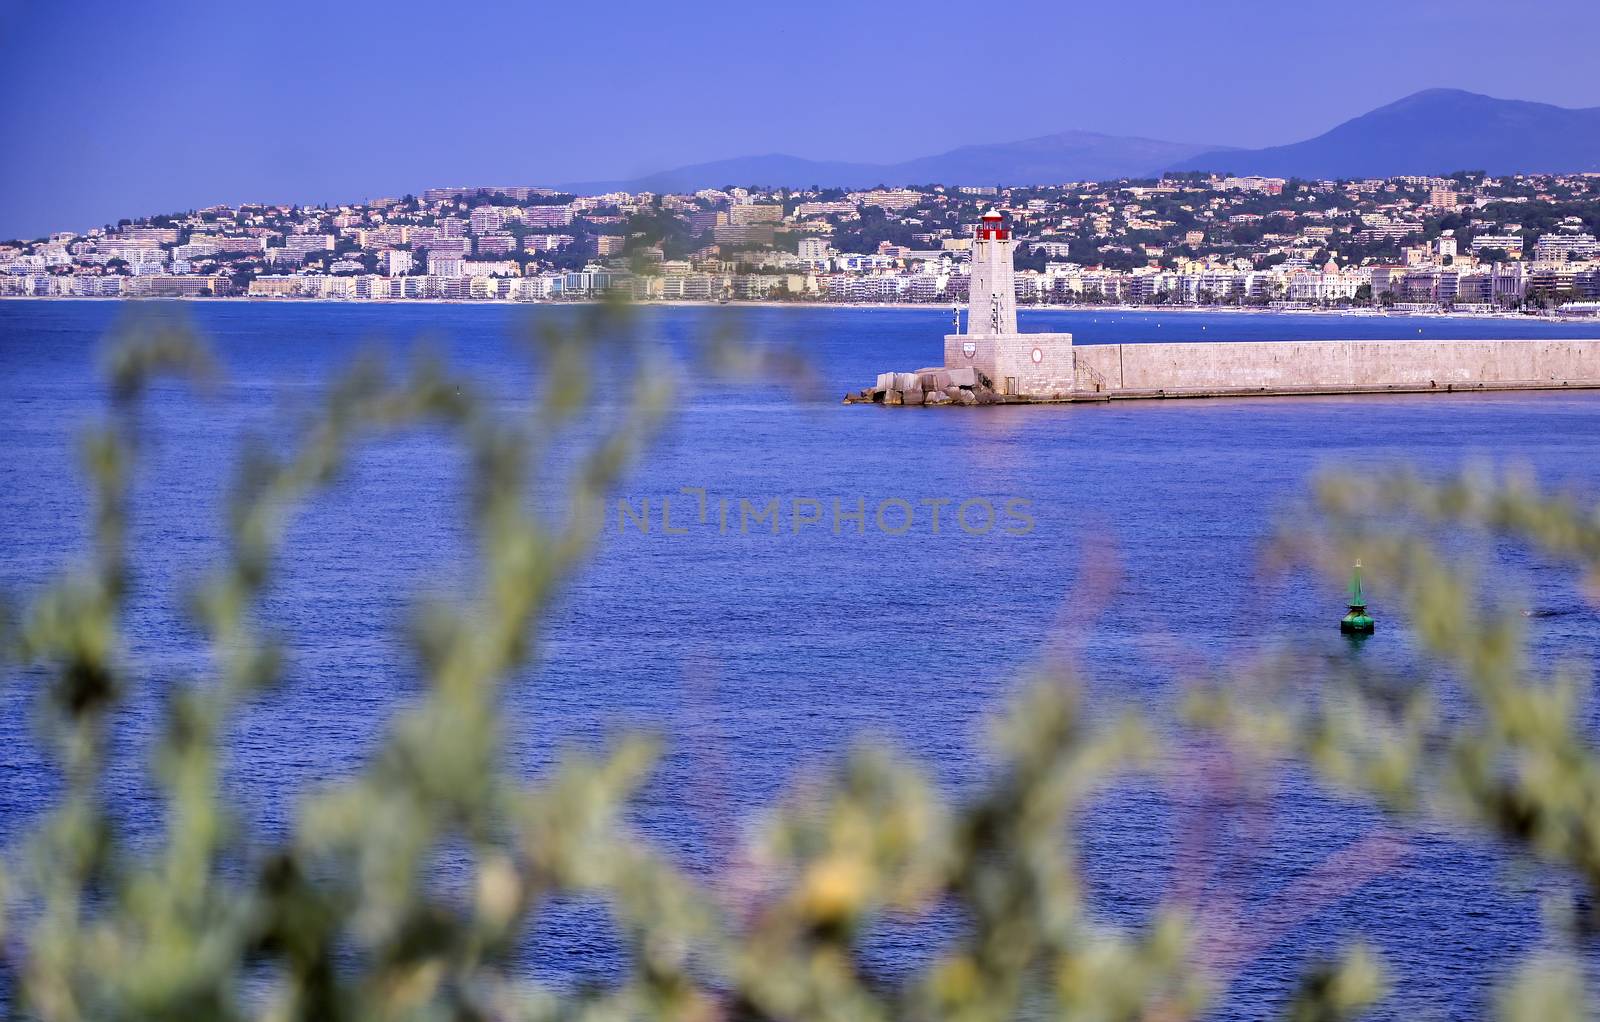 Lighthouse in Nice, France by jbyard22